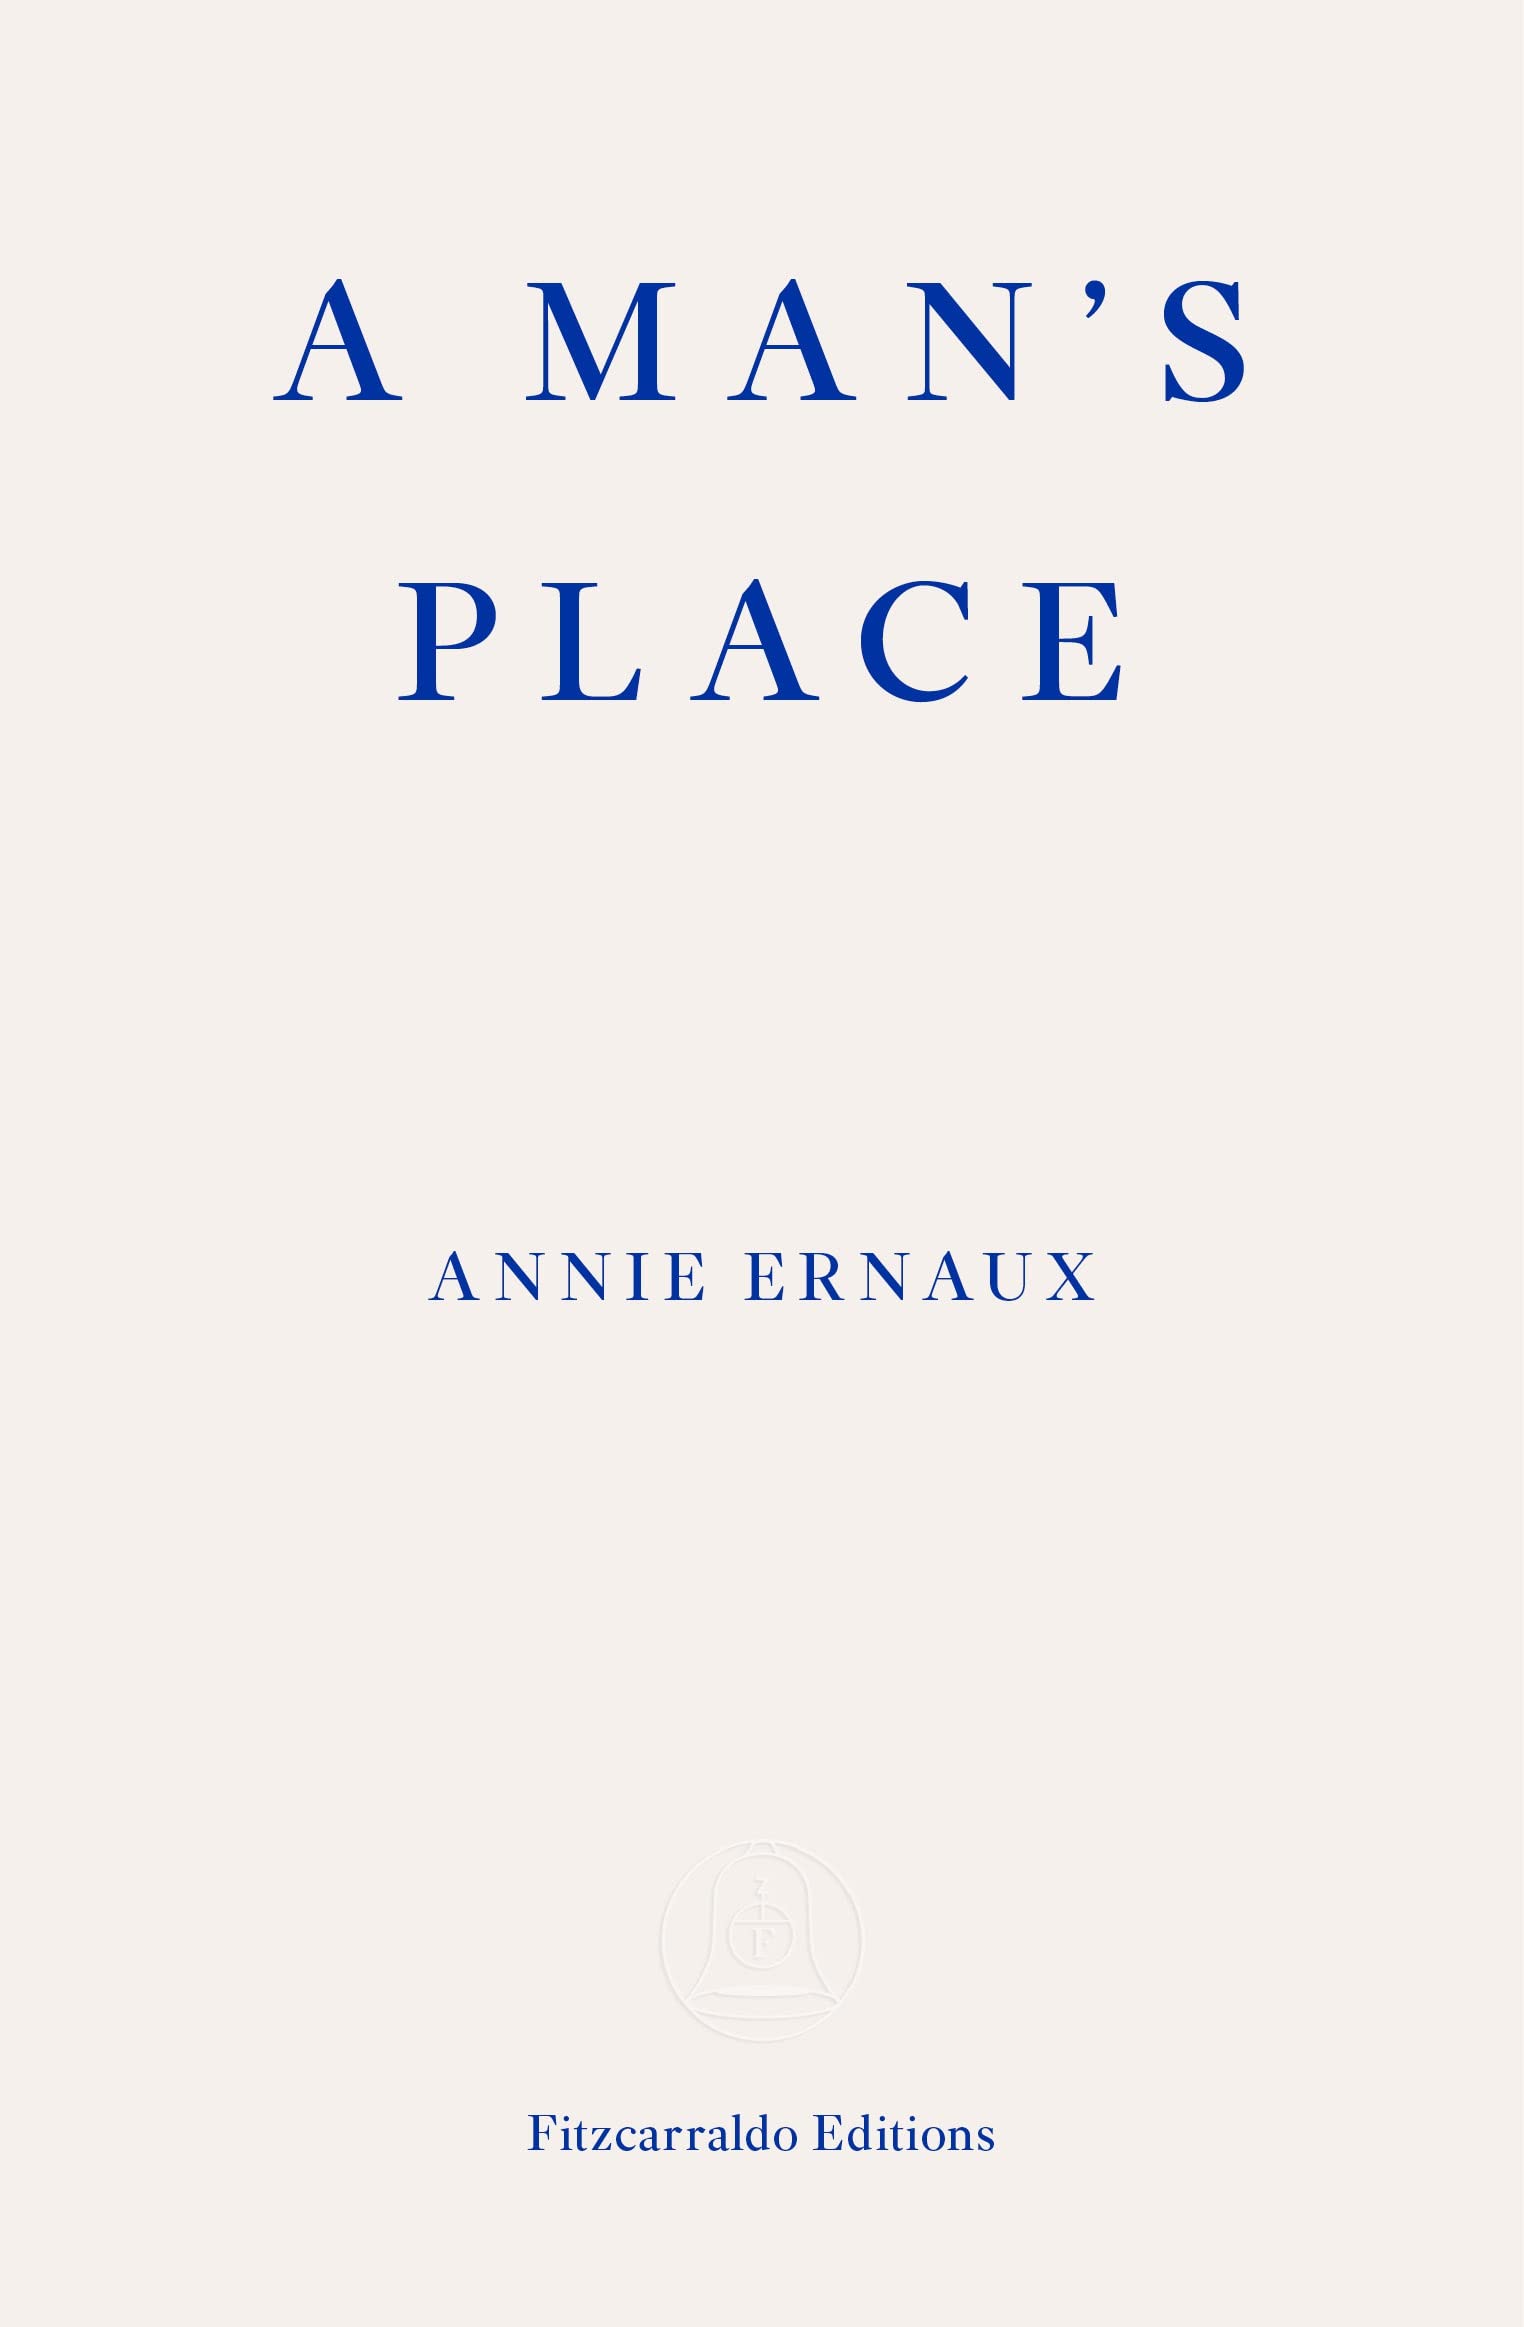 Man's Place (2020, Fitzcarraldo Editions)